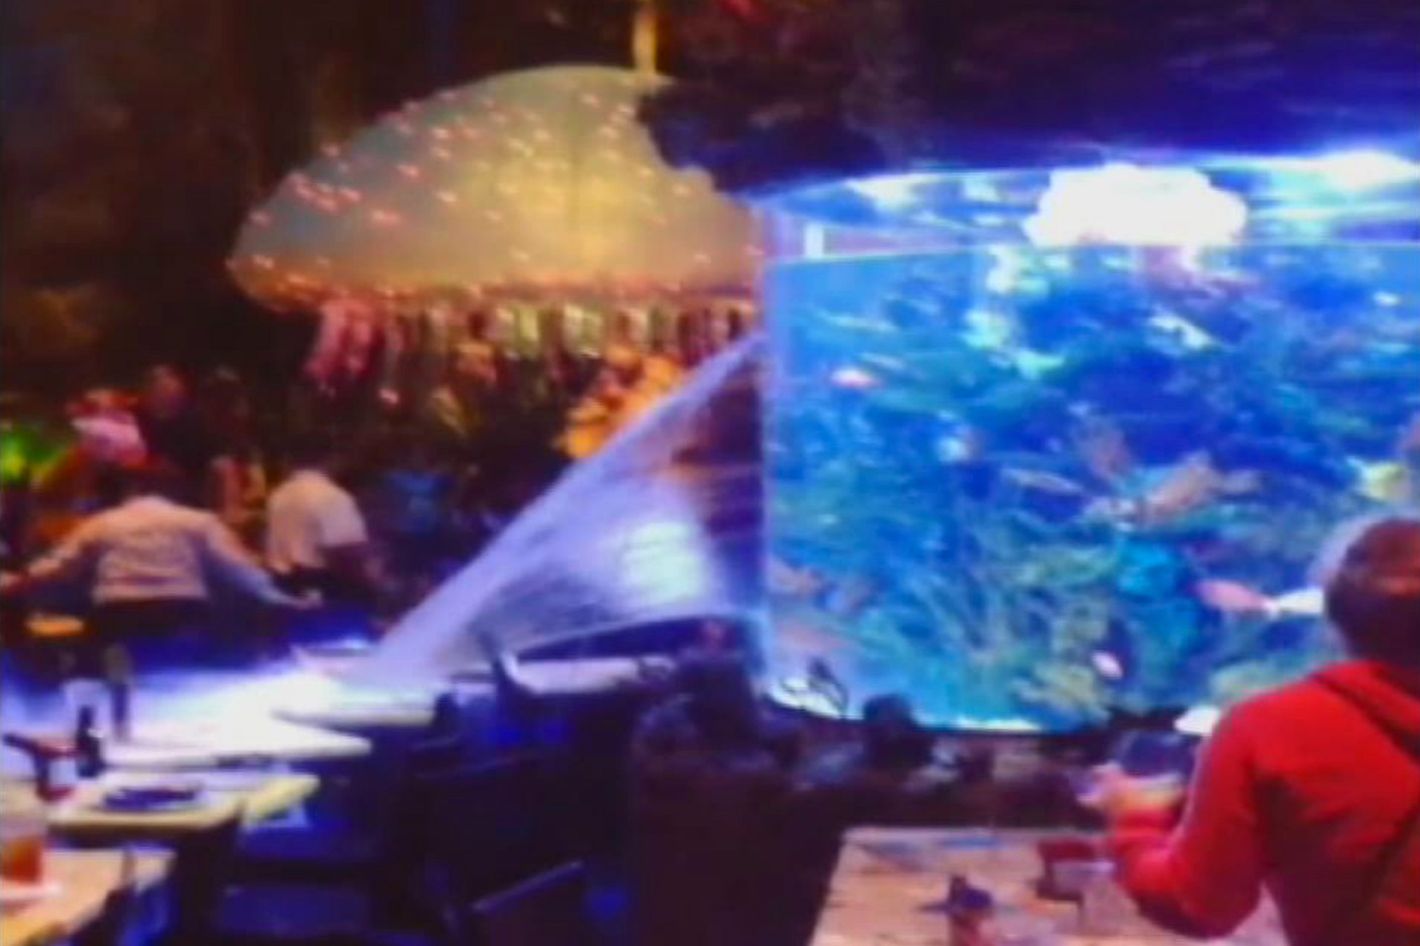 huge fish tank